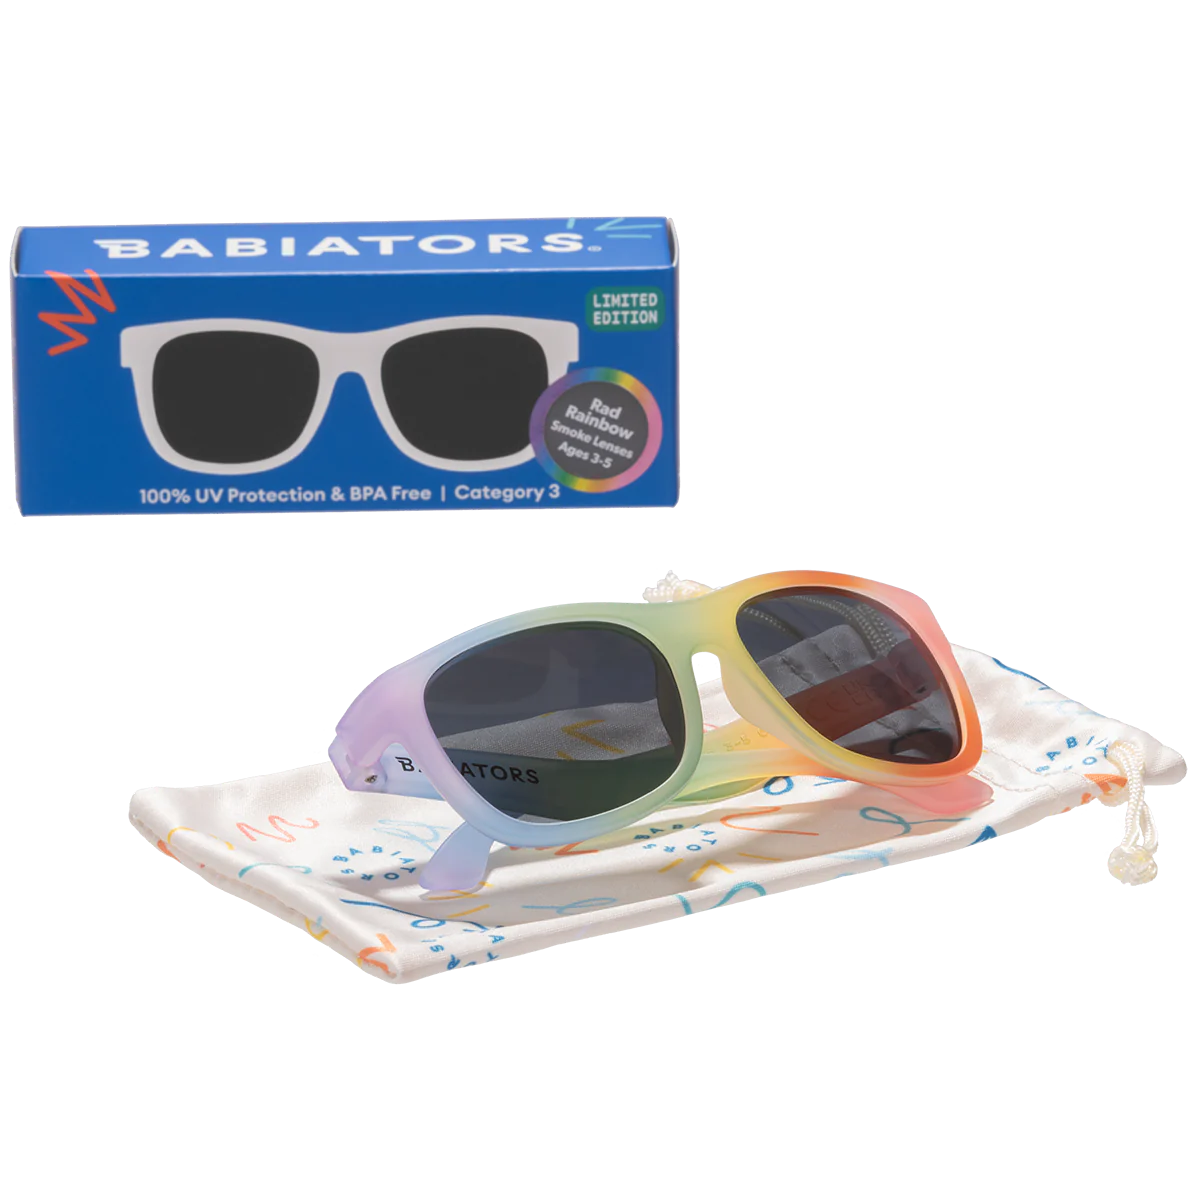 Babiators Original Navigators - Rad Rainbow LIMITED EDITION Sunglasses Babiators 